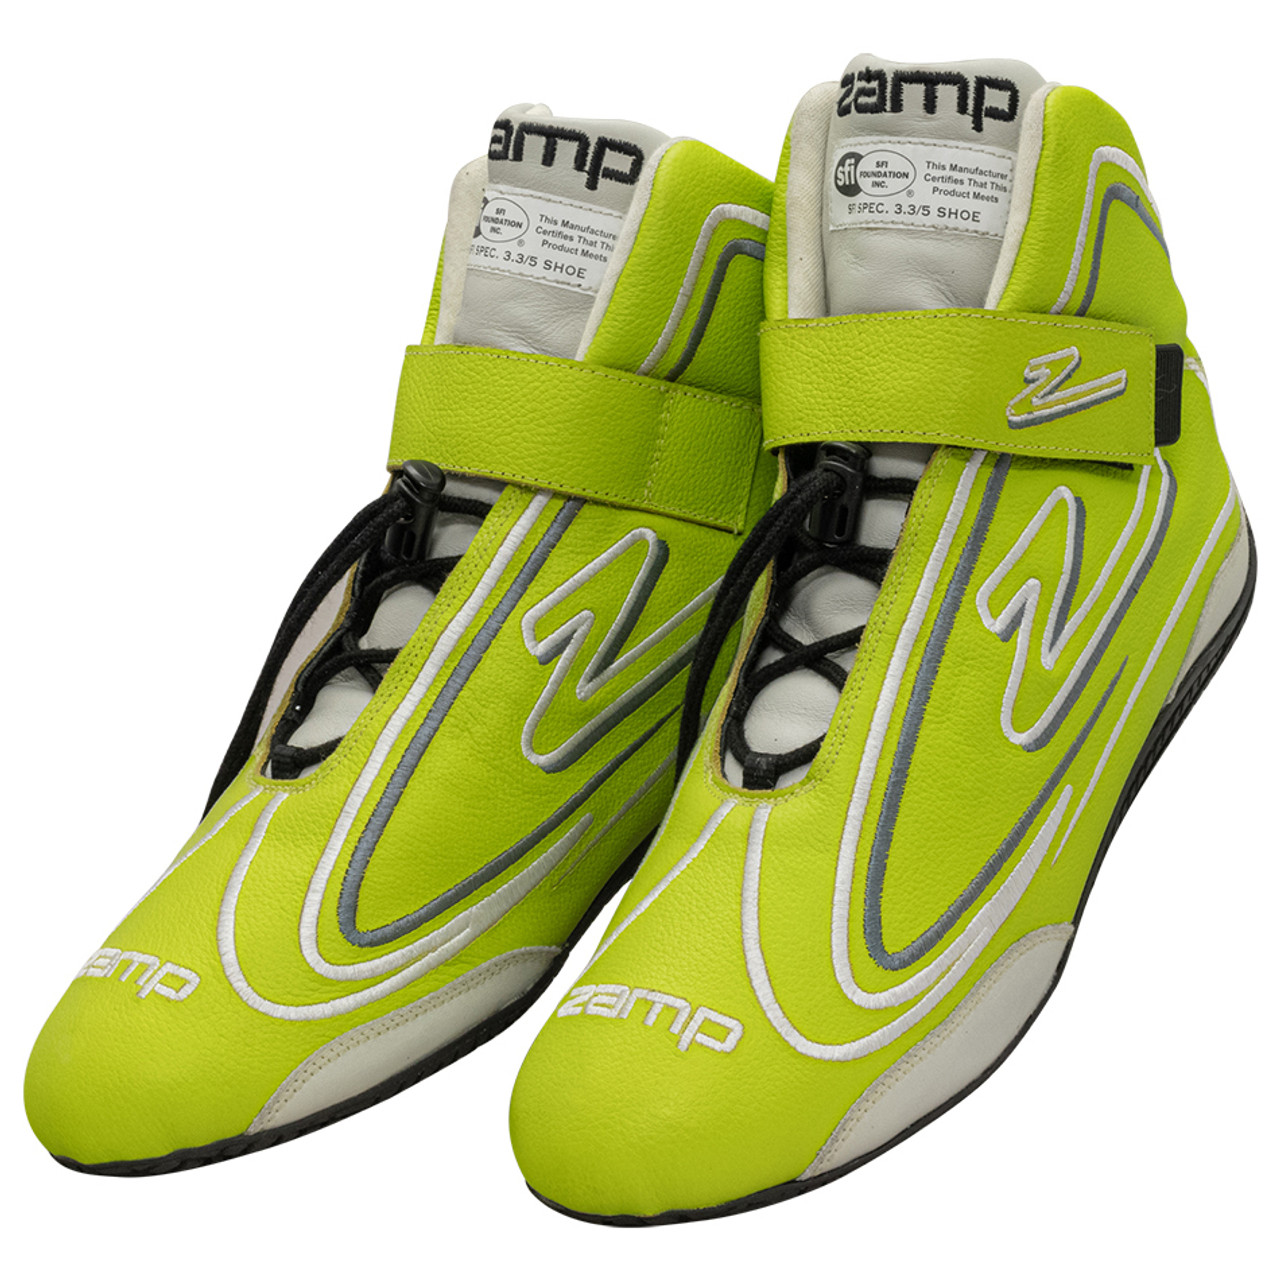 Shoe ZR-50 Neon Green Size 10 SFI 3.3/5